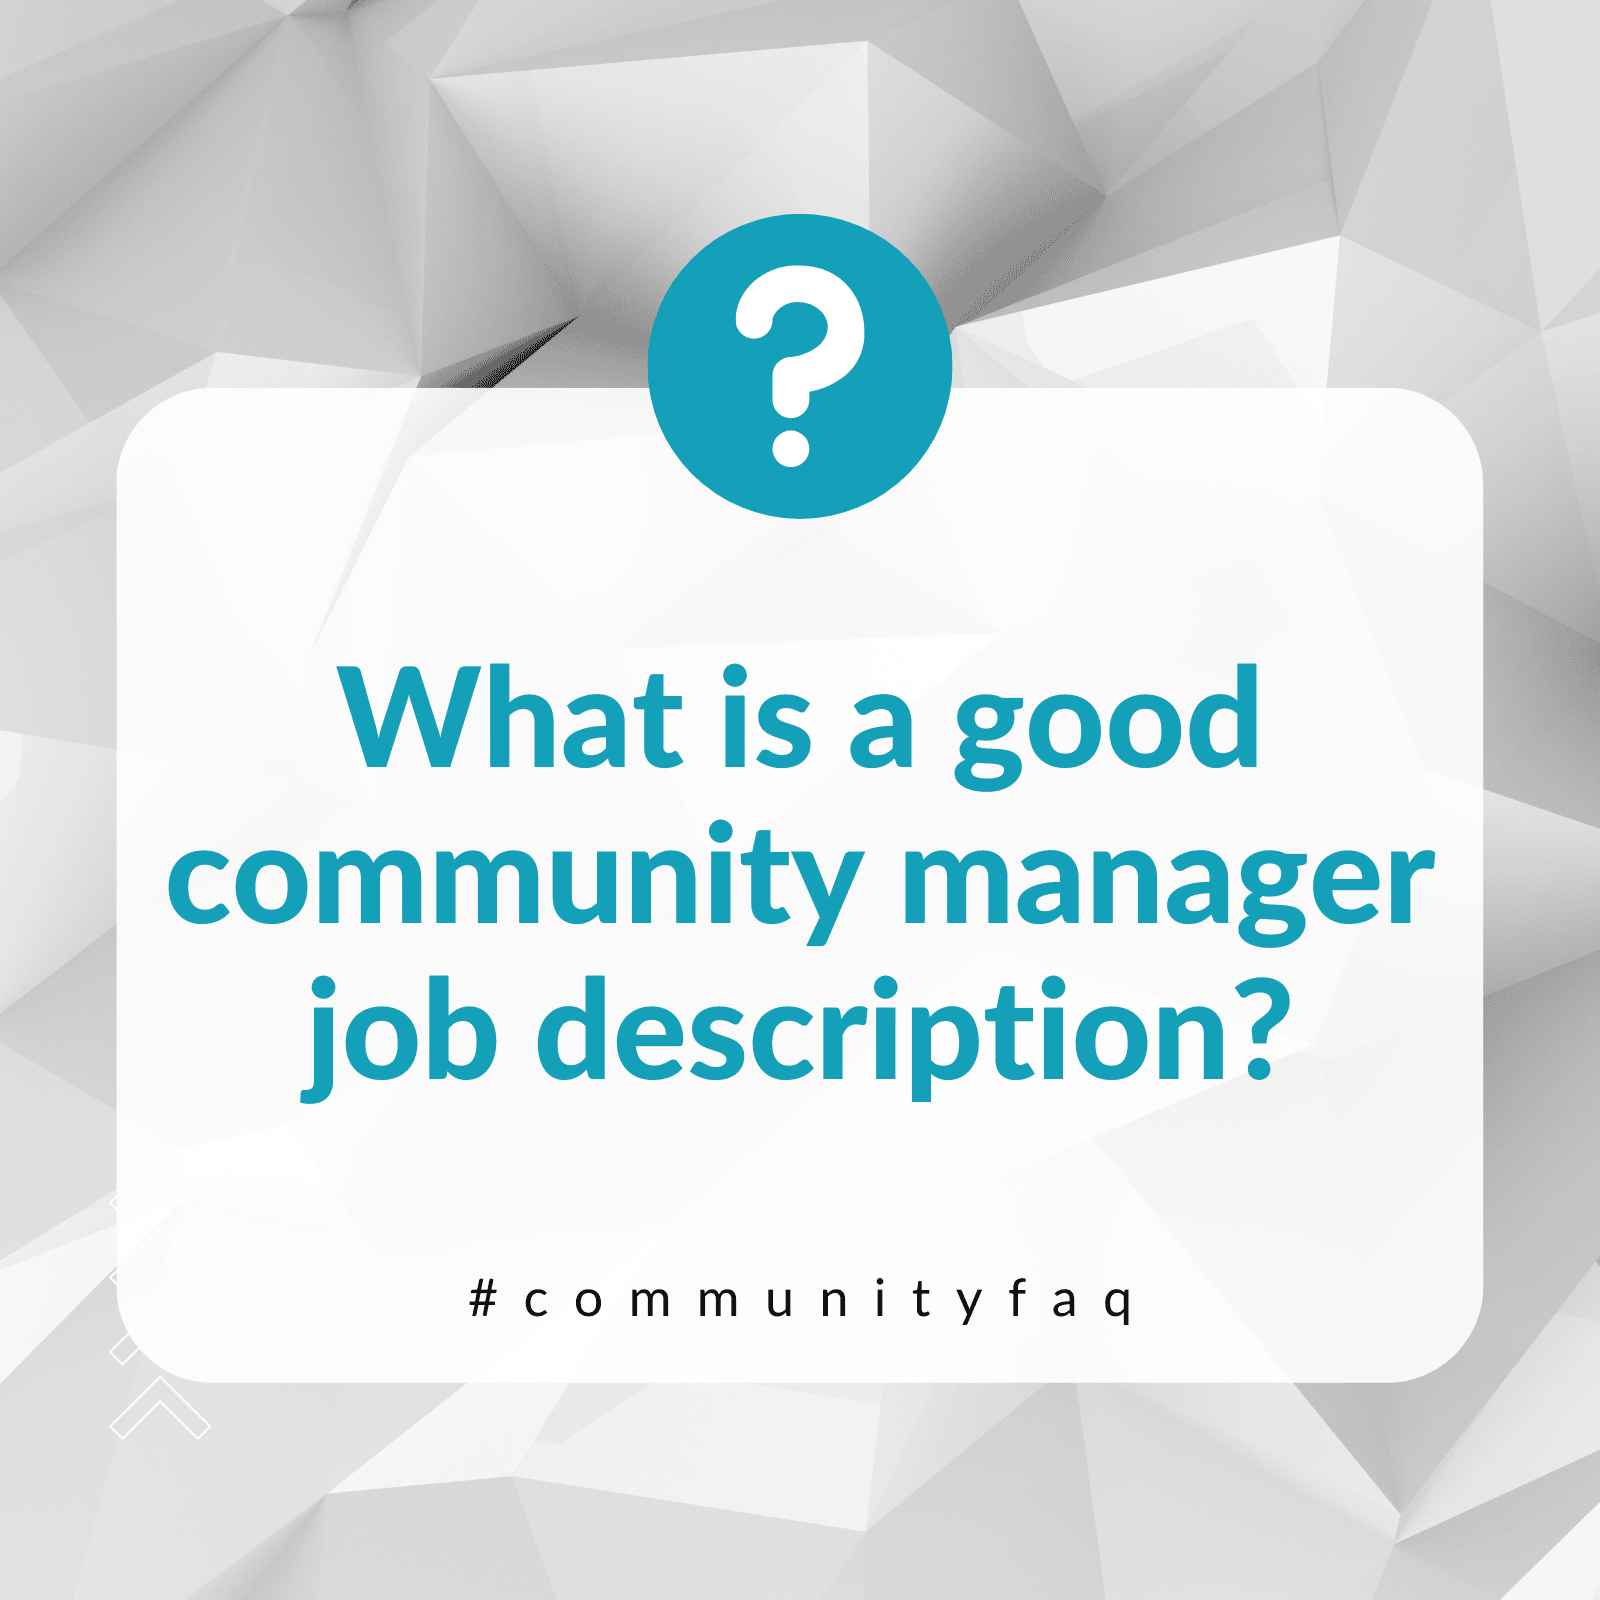 What is a good community manager job description?